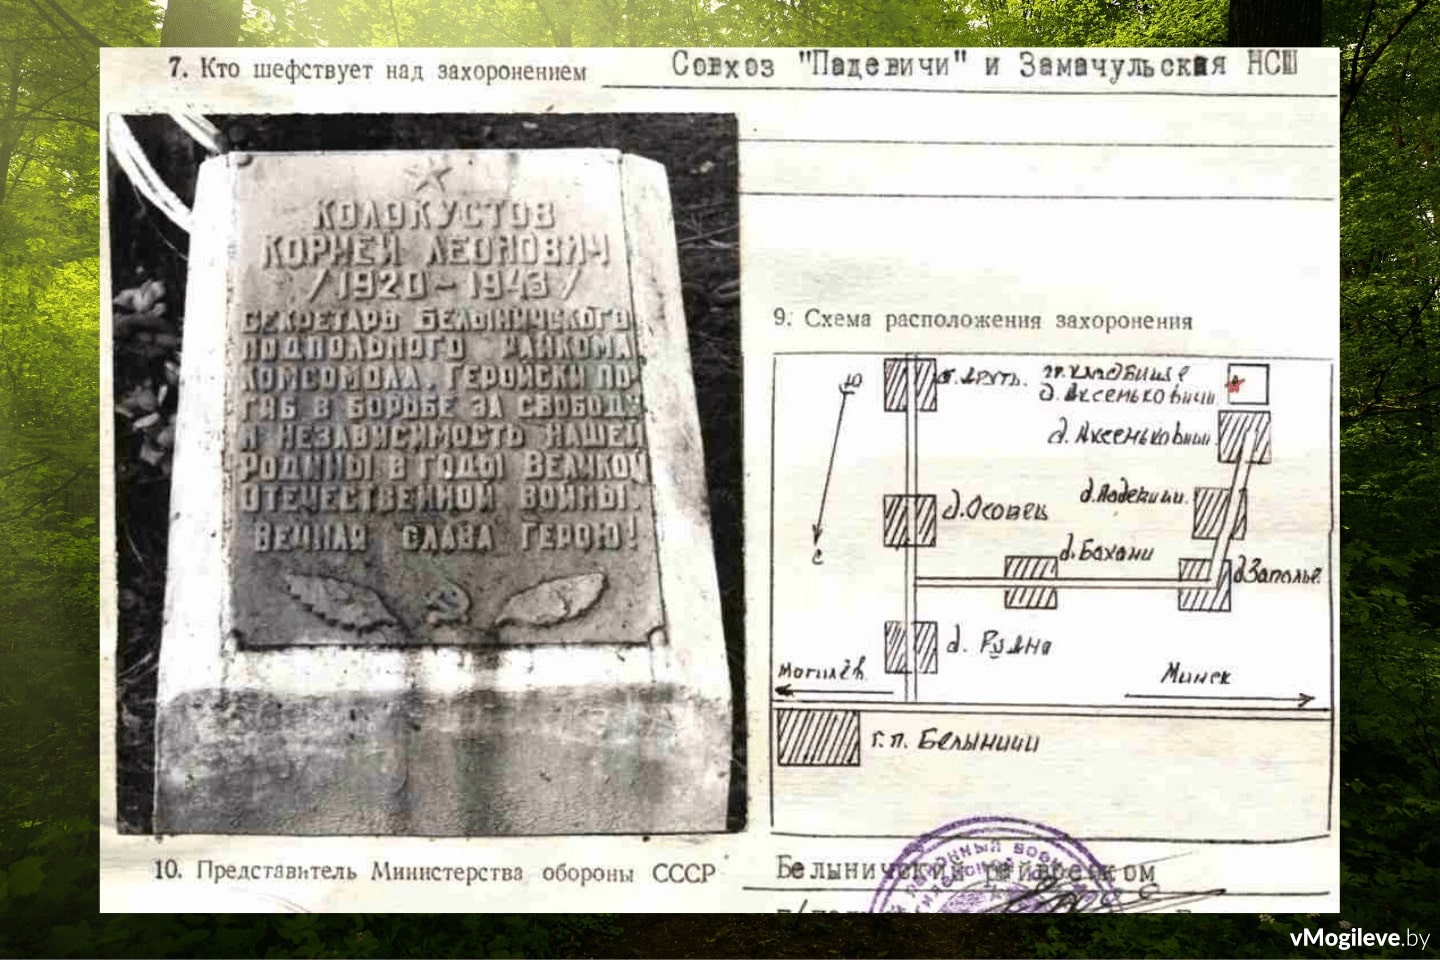 Документ о захоронении партизана Калакустова Корнея Леоновича